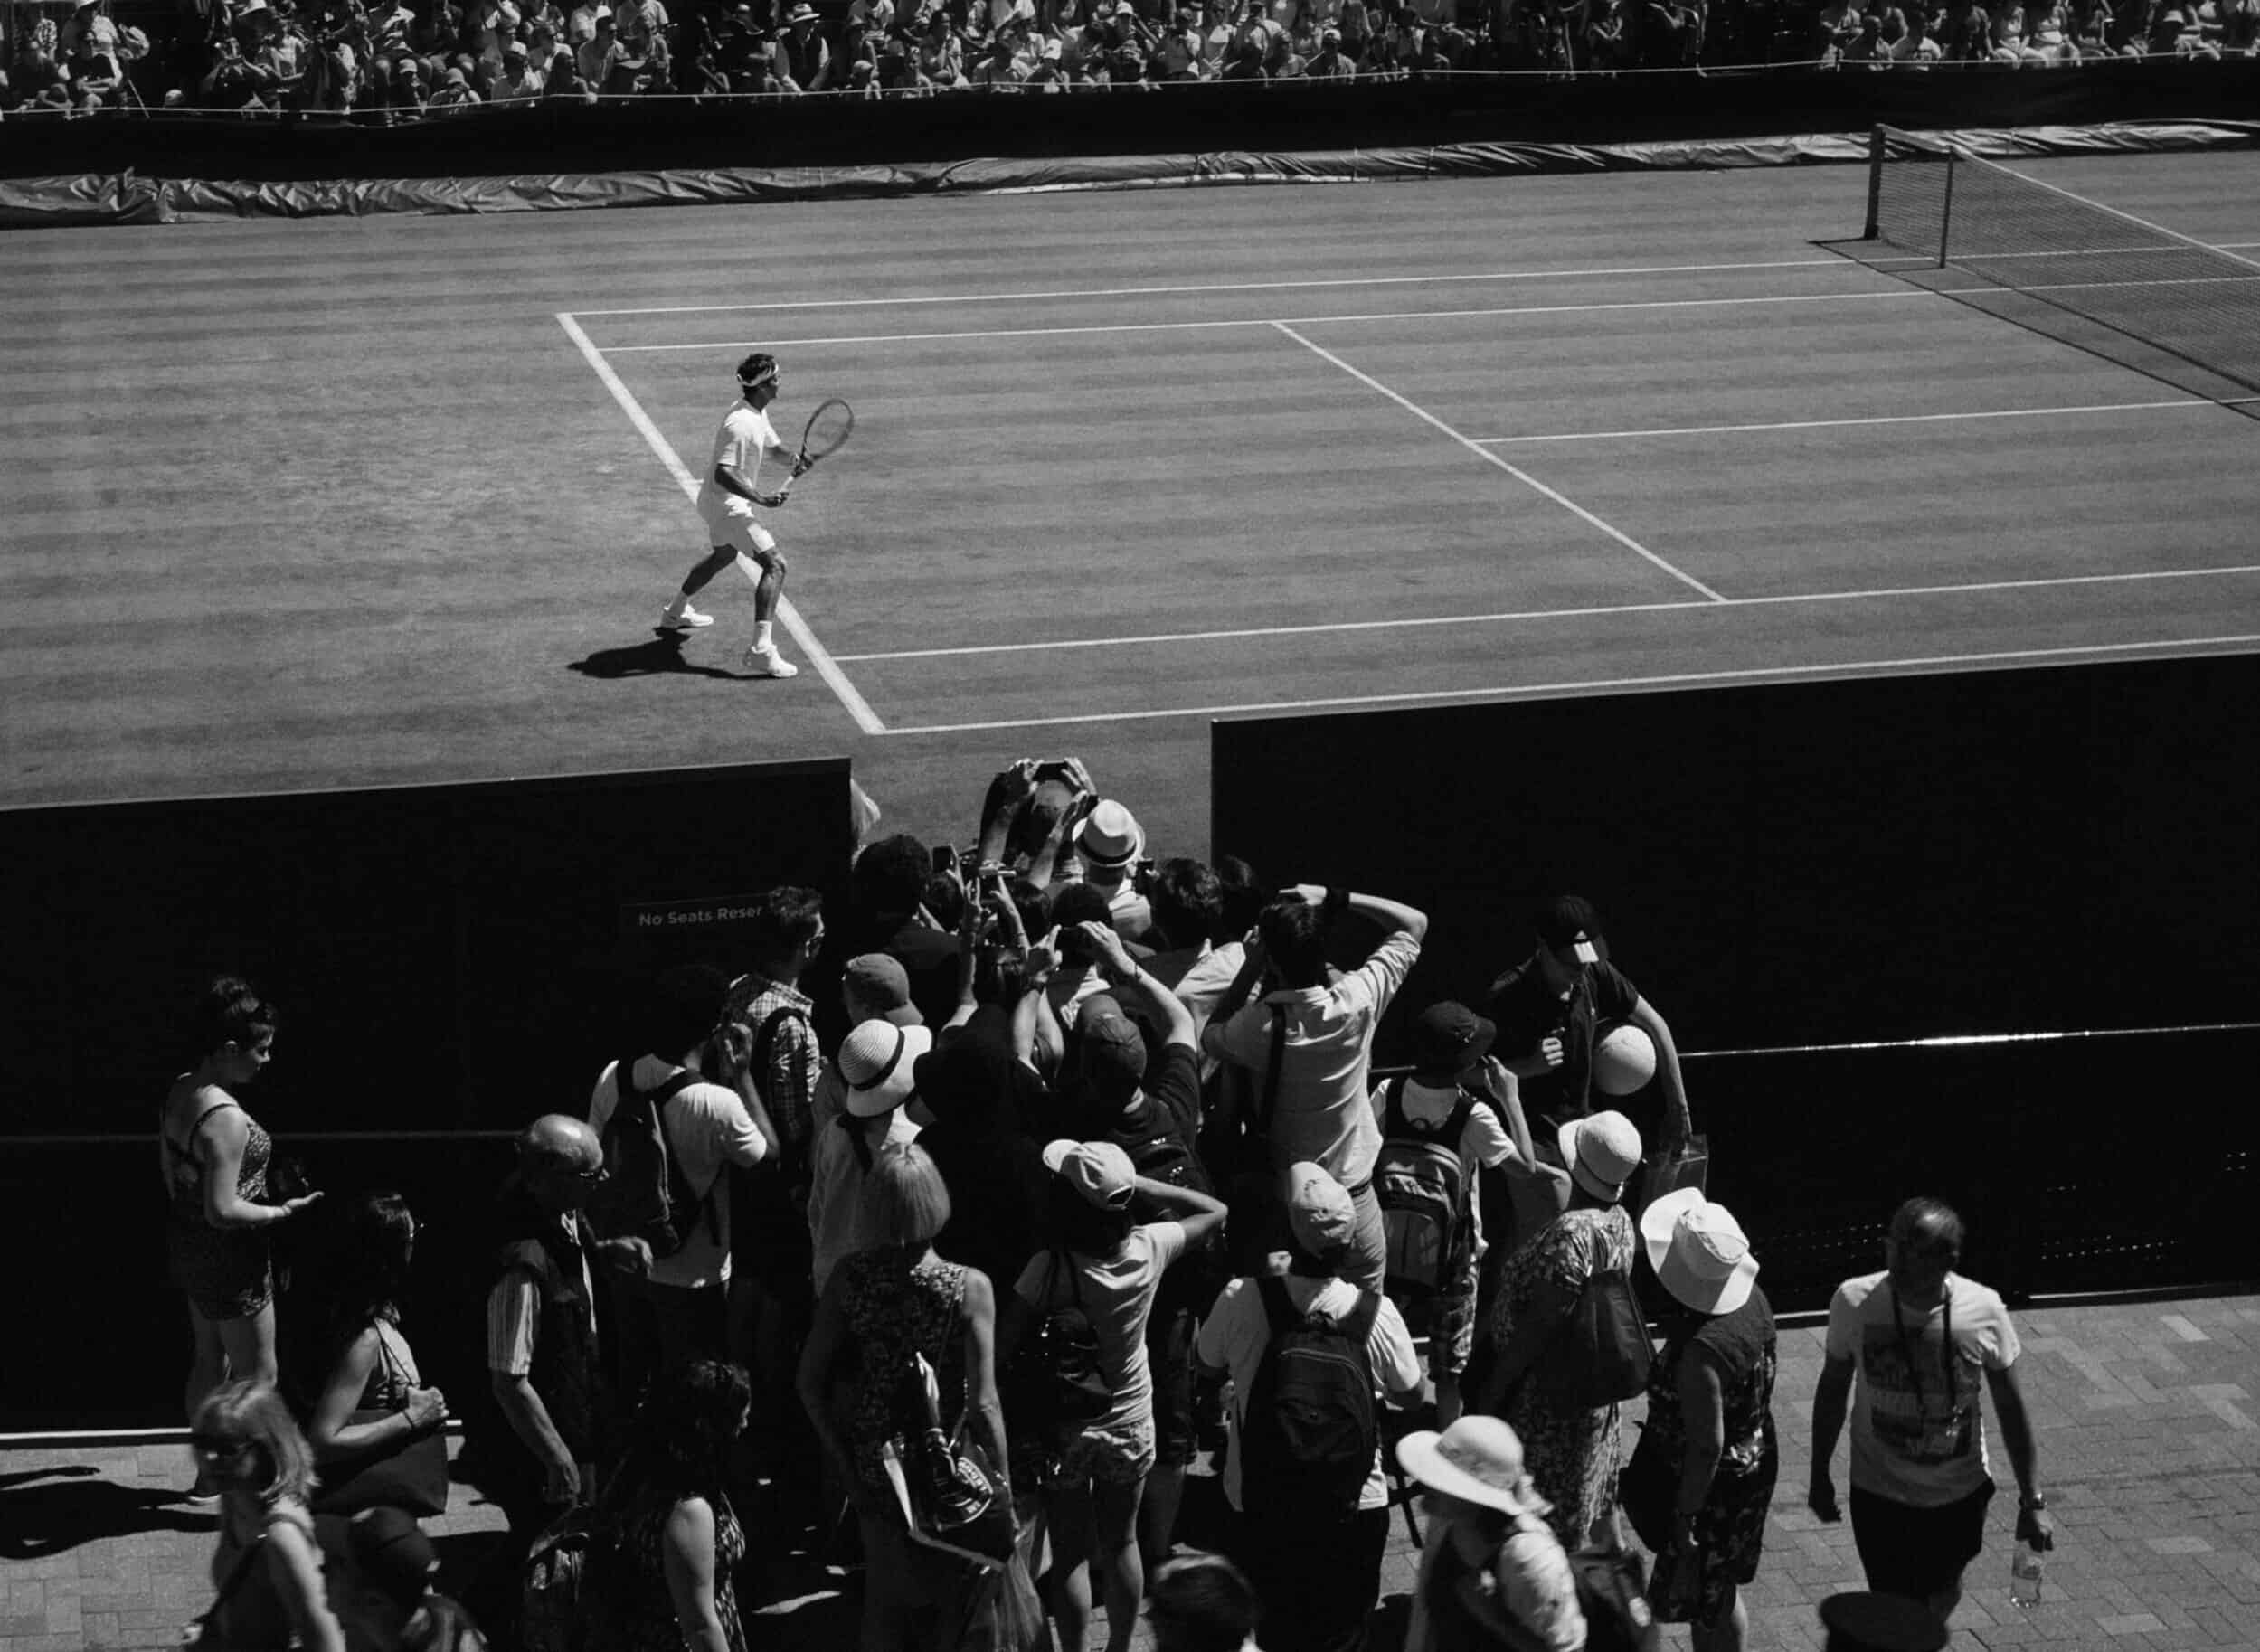 Roger Federer playing Tennis